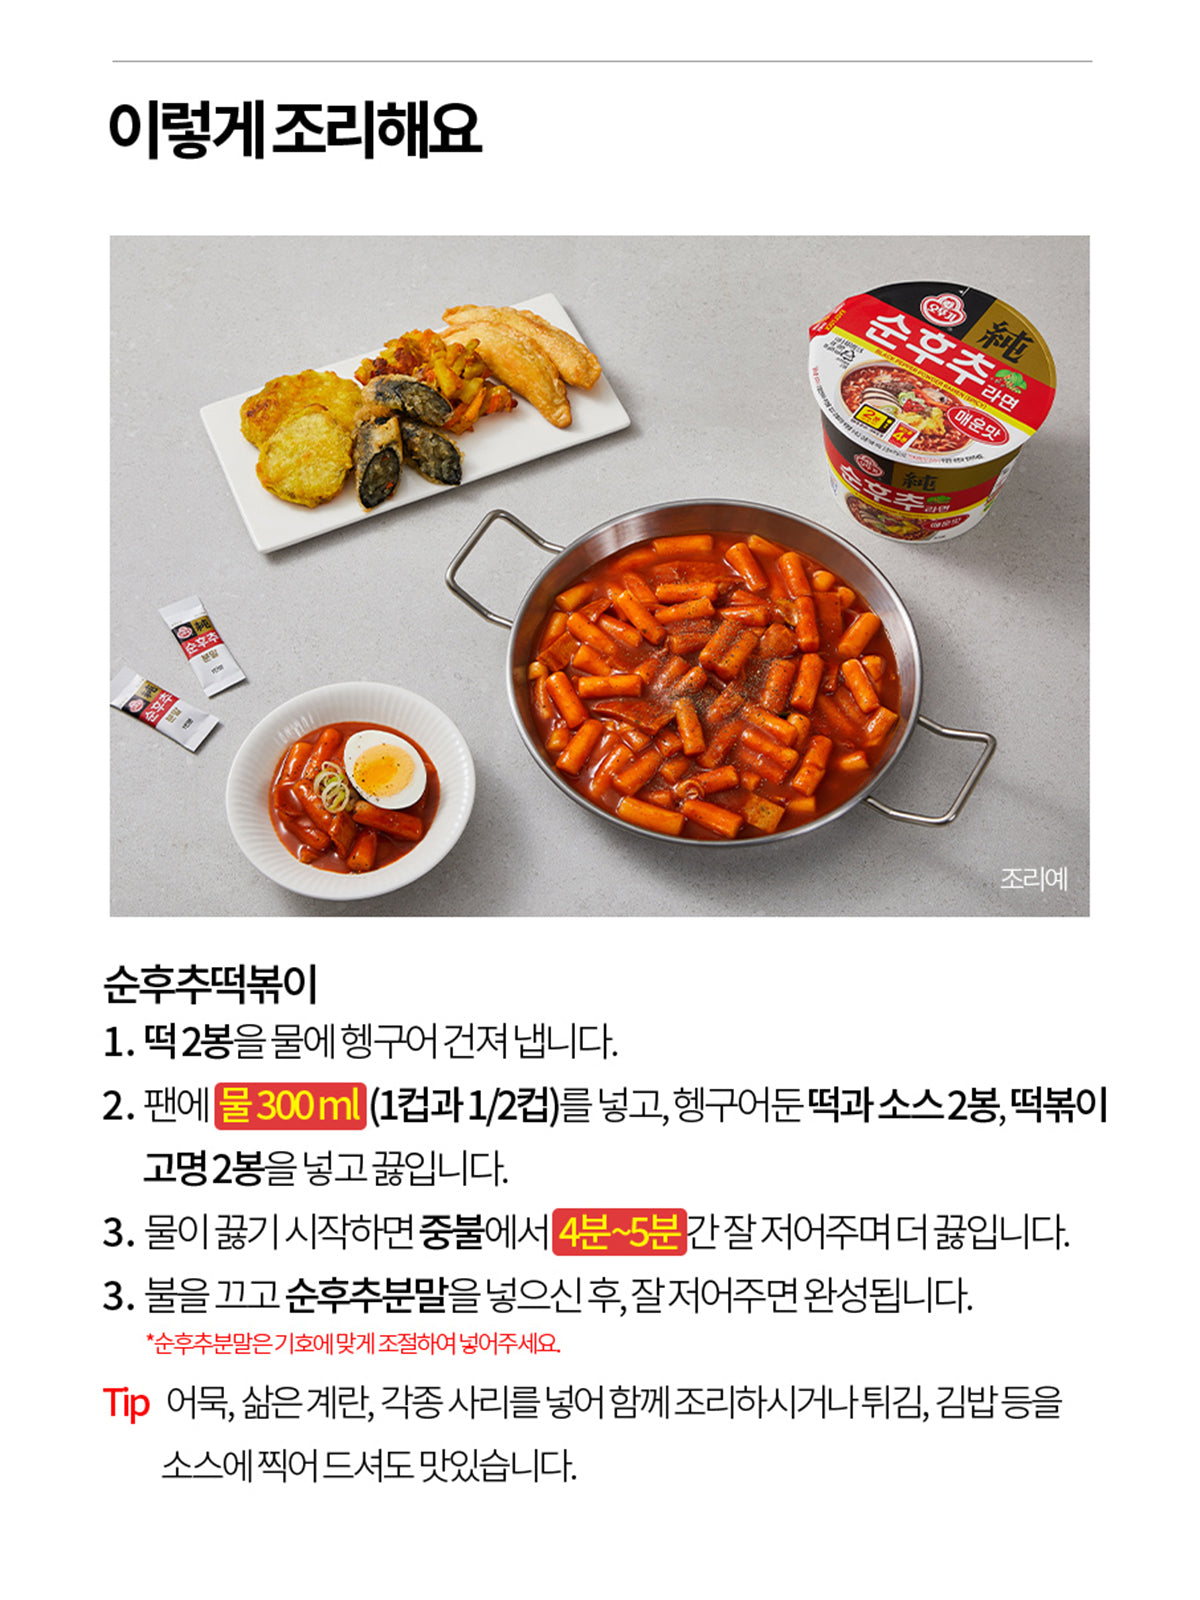 Tteok-bokki (Spicy Rice Cake) with Black Pepper Powder 426.4g(15.04oz)